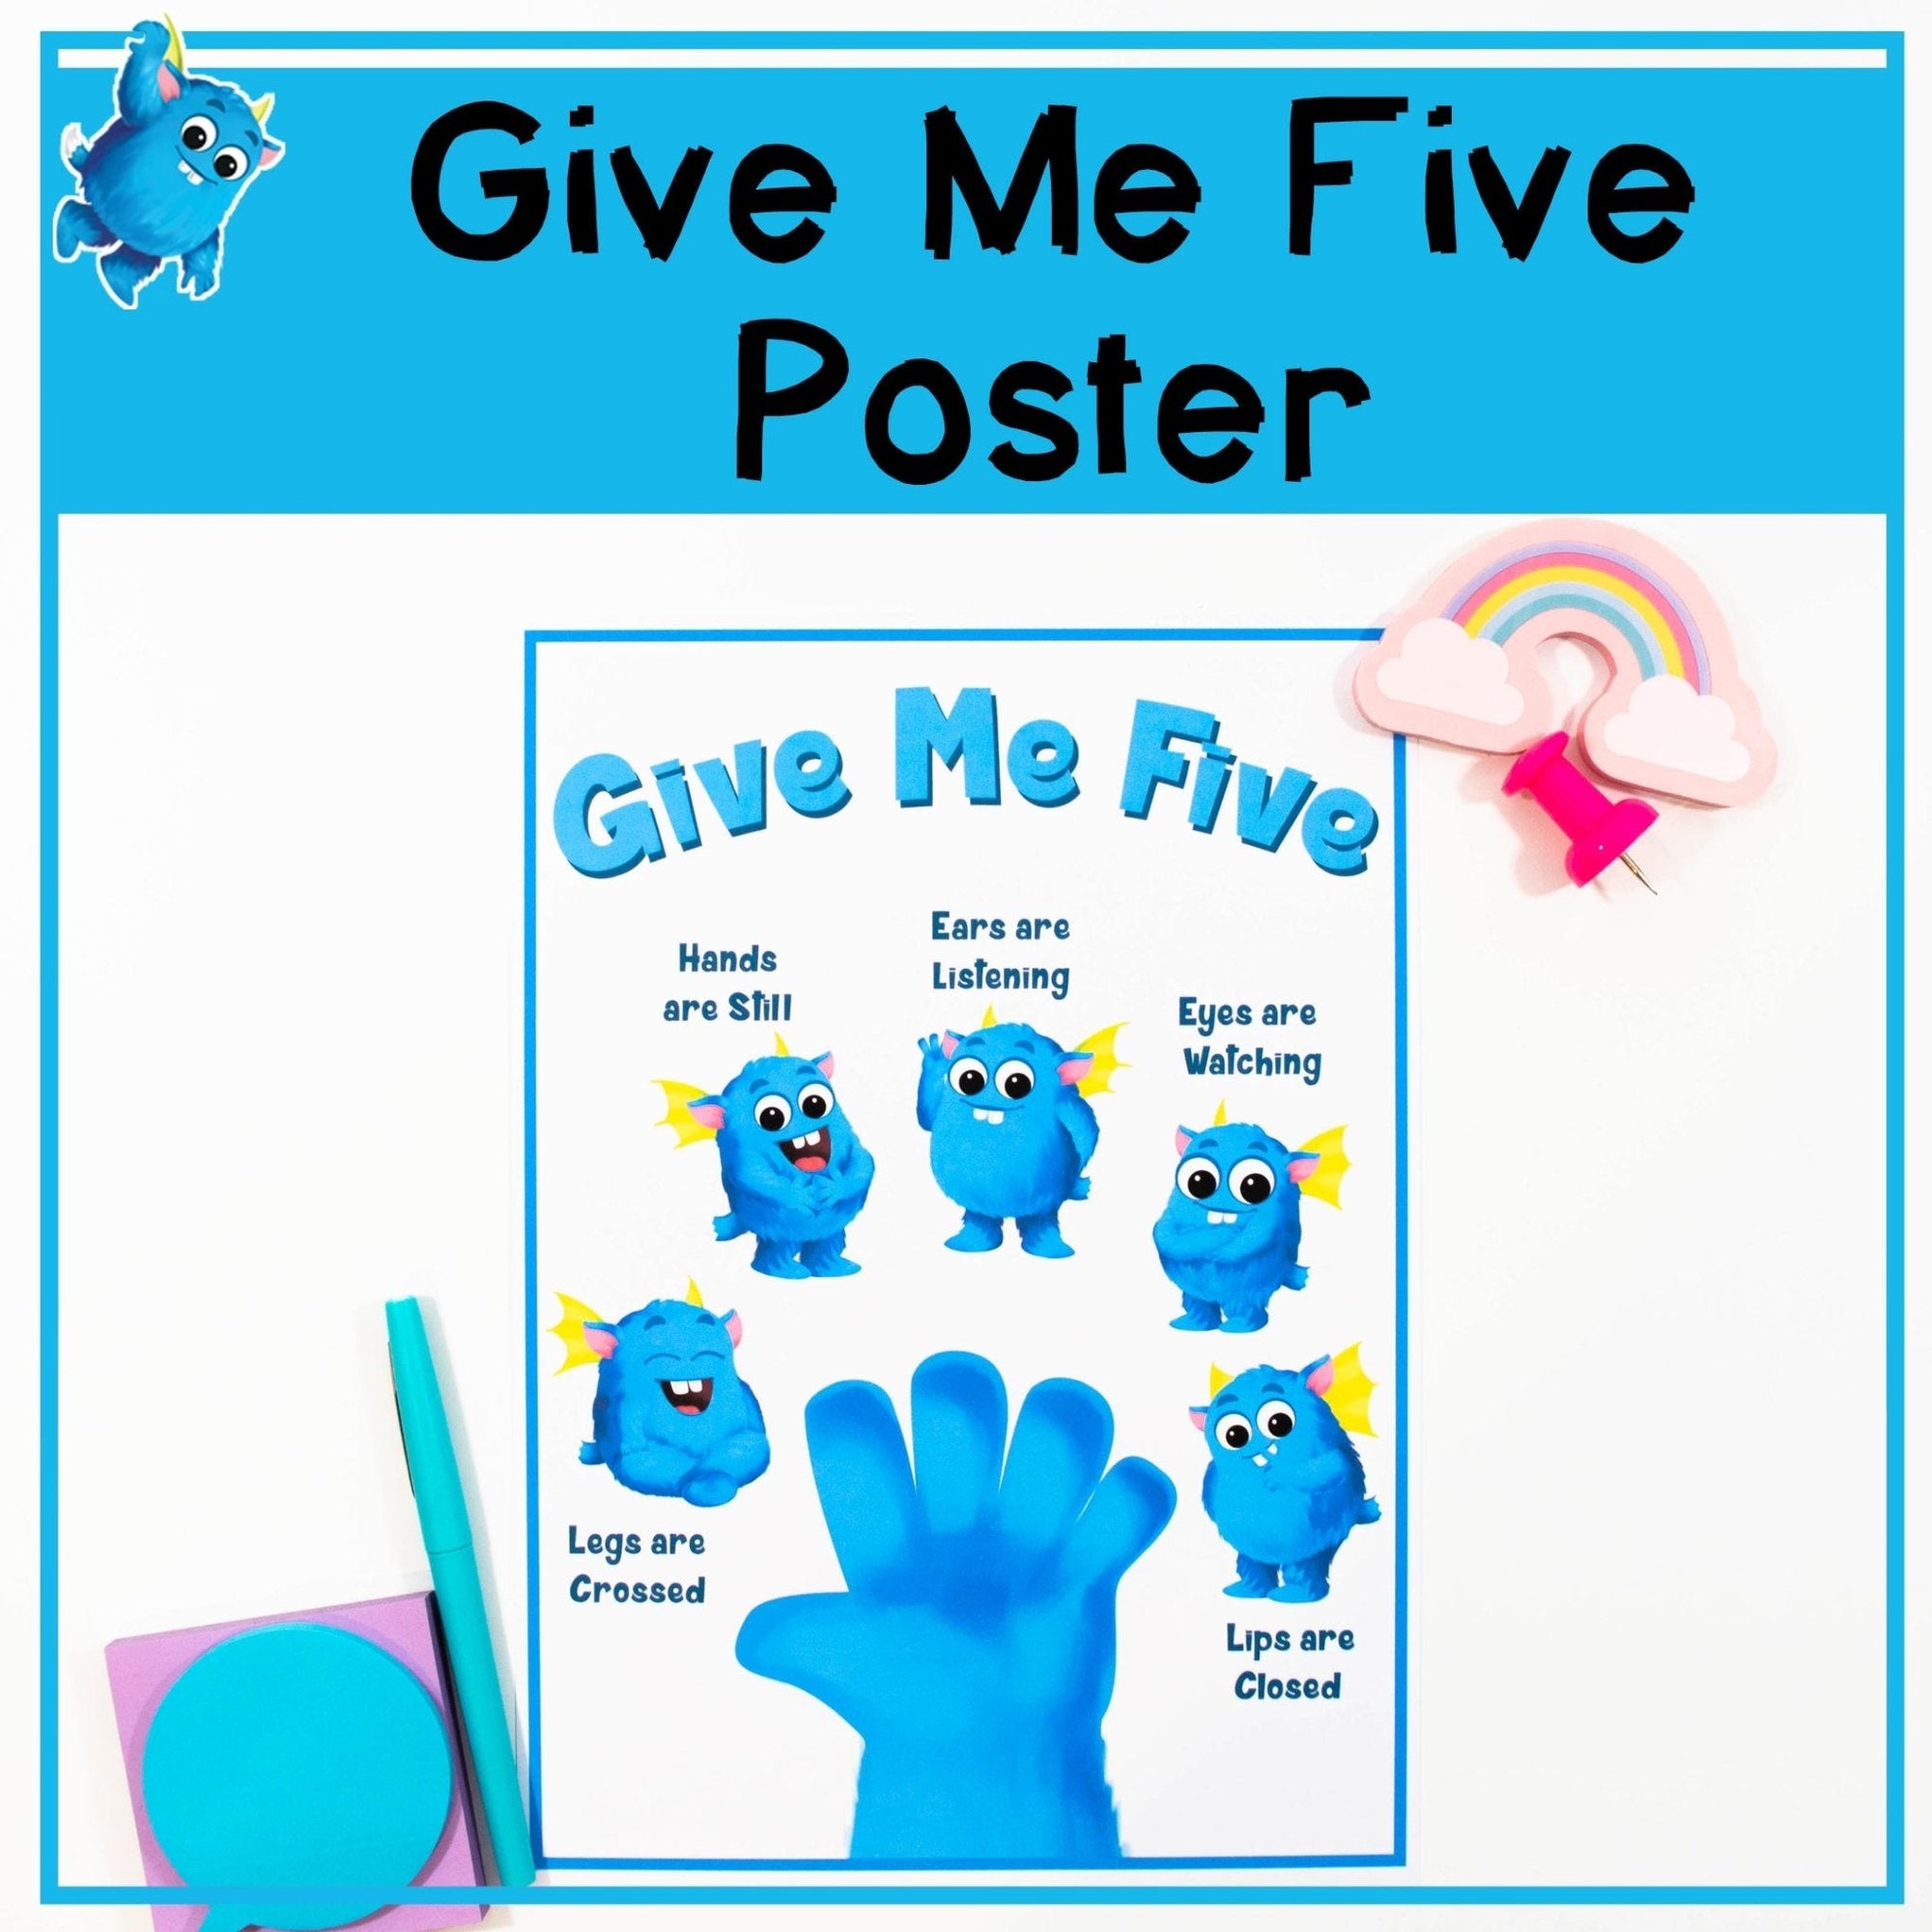 Give Me Five Poster - Your Teacher's Pet Creature